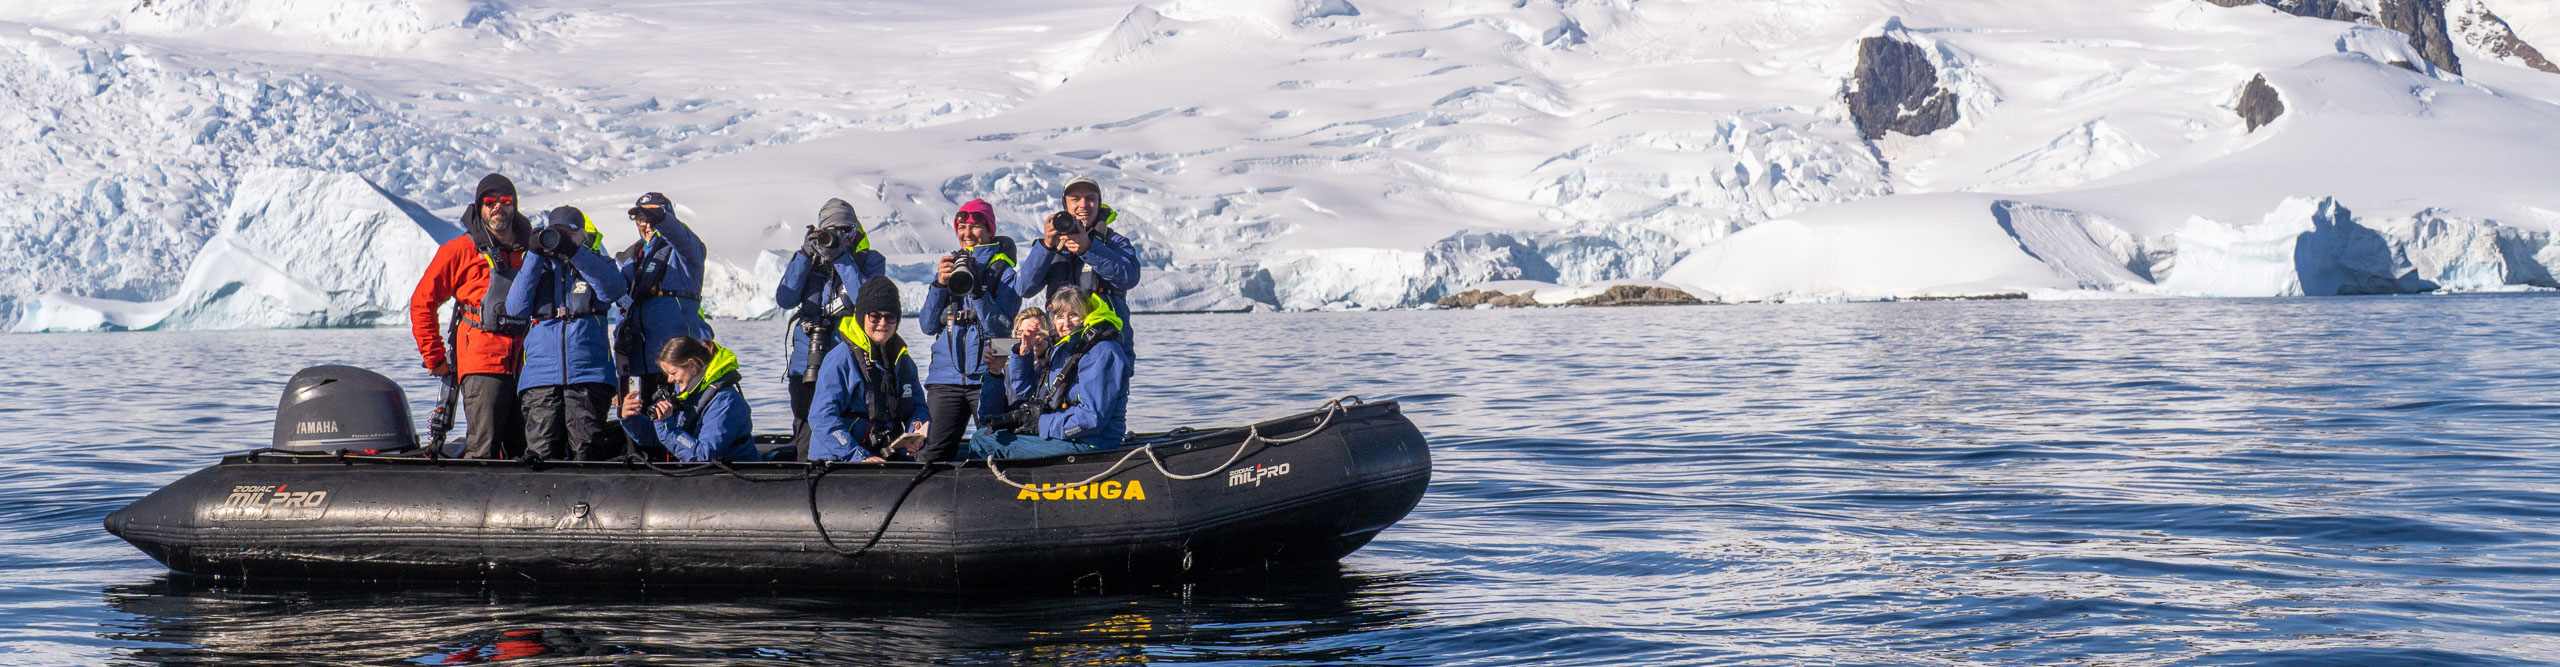 Group on kodiak taking photos in Antarctica